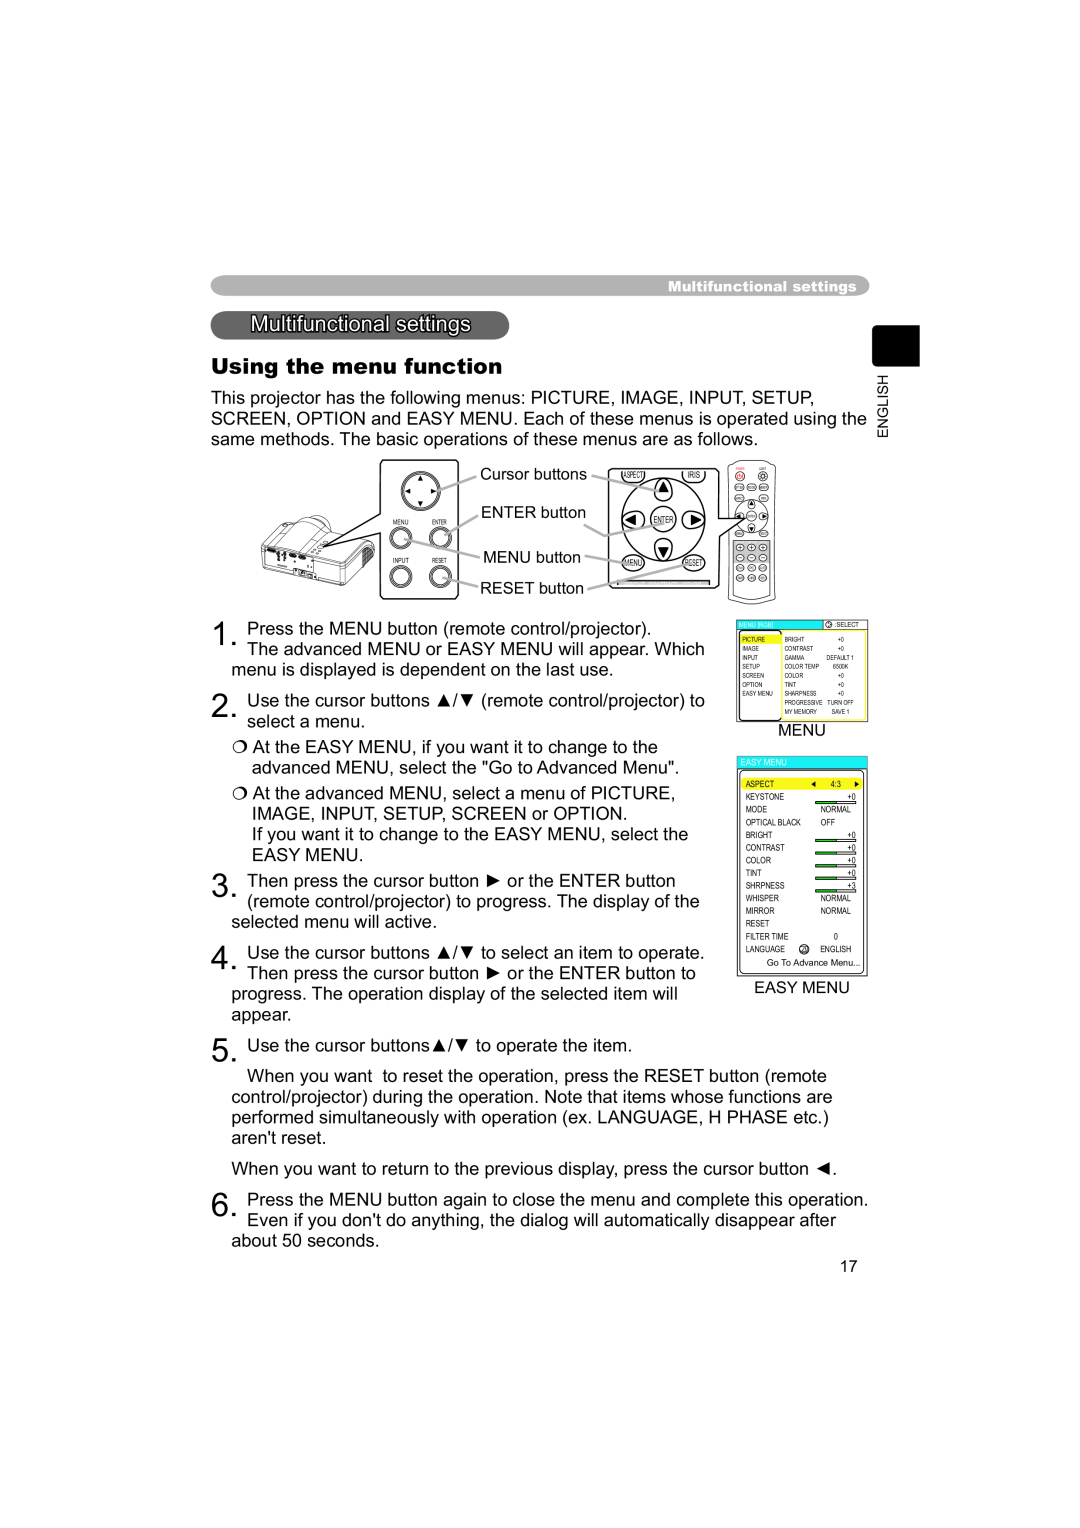 Hitachi PJ-TX100 user manual Multifunctional settings, Using the menu function 